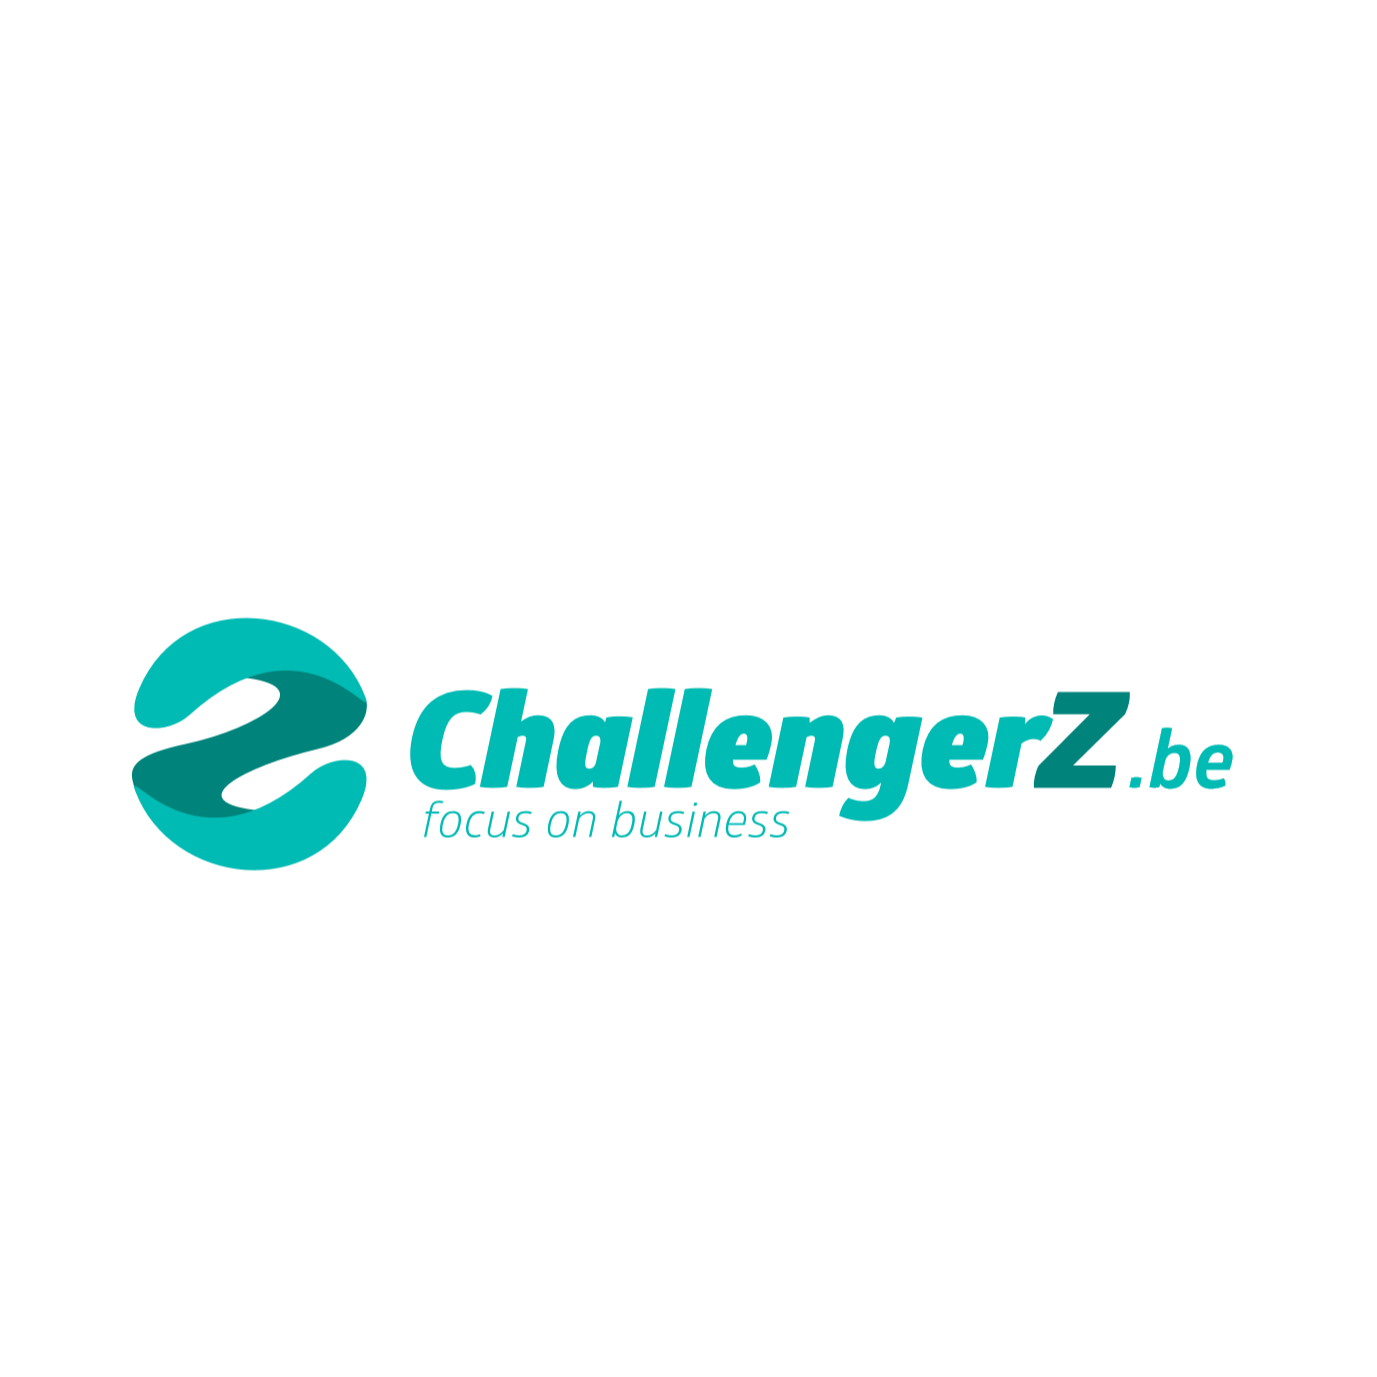 ChallengerZ - Business Management Consultant - Antwerpen - 03 284 50 46 Belgium | ShowMeLocal.com